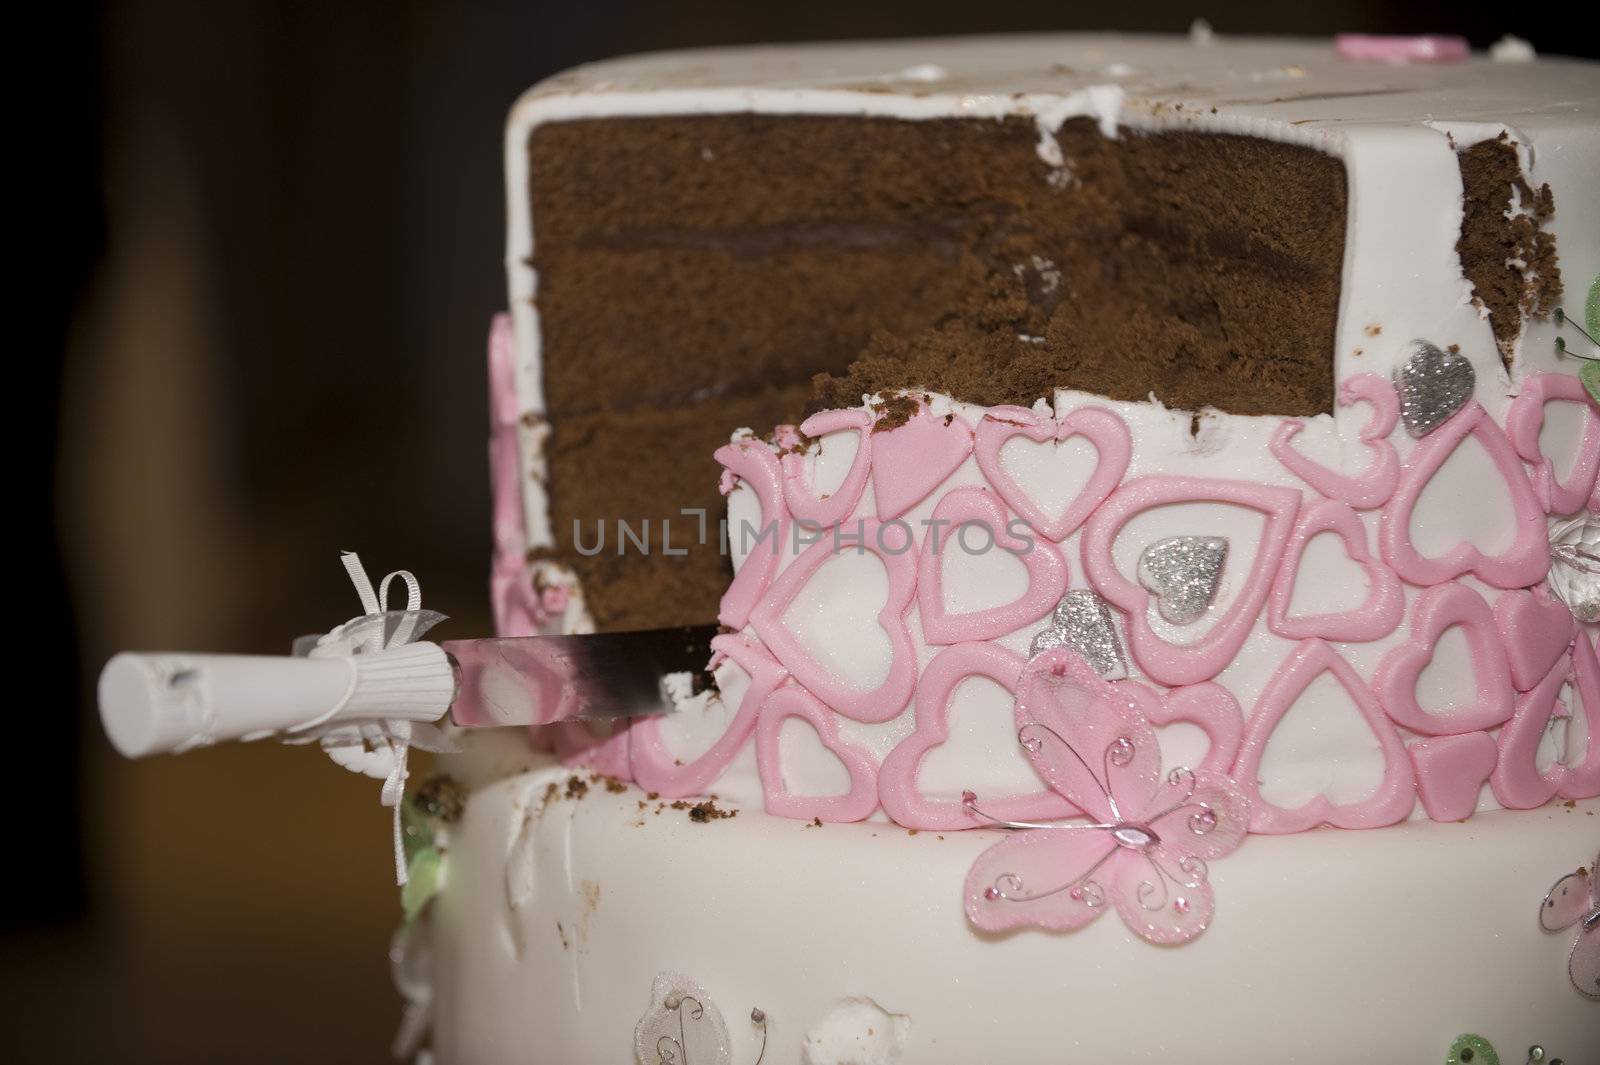 Knife in wedding cake by Ansunette